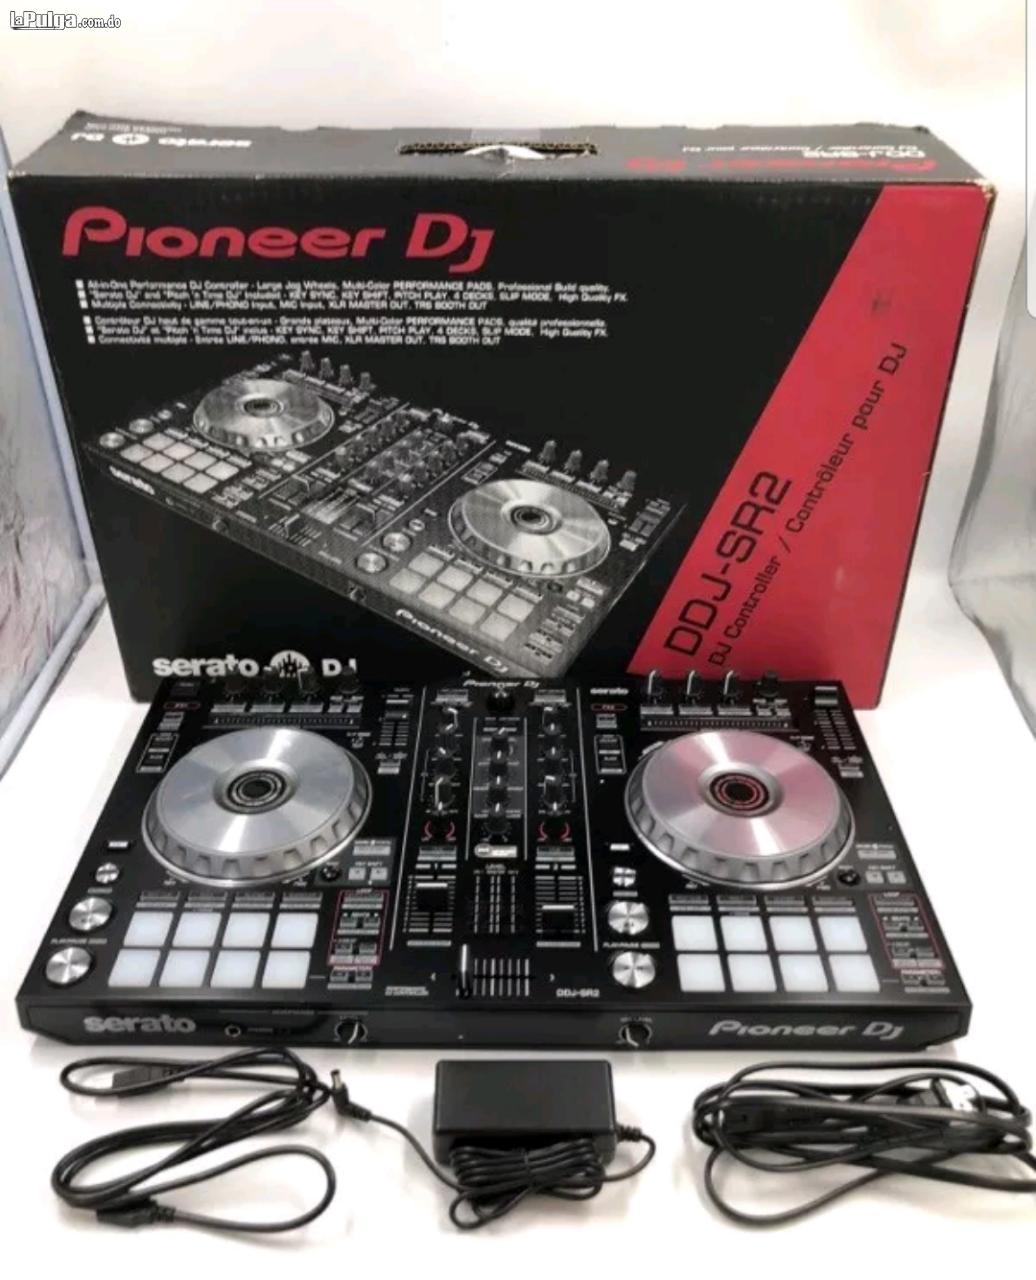 SERATO DJ Pioneer SR2 Mixer Controller Platos UltraProGBTBPedestandNot Foto 7153393-1.jpg